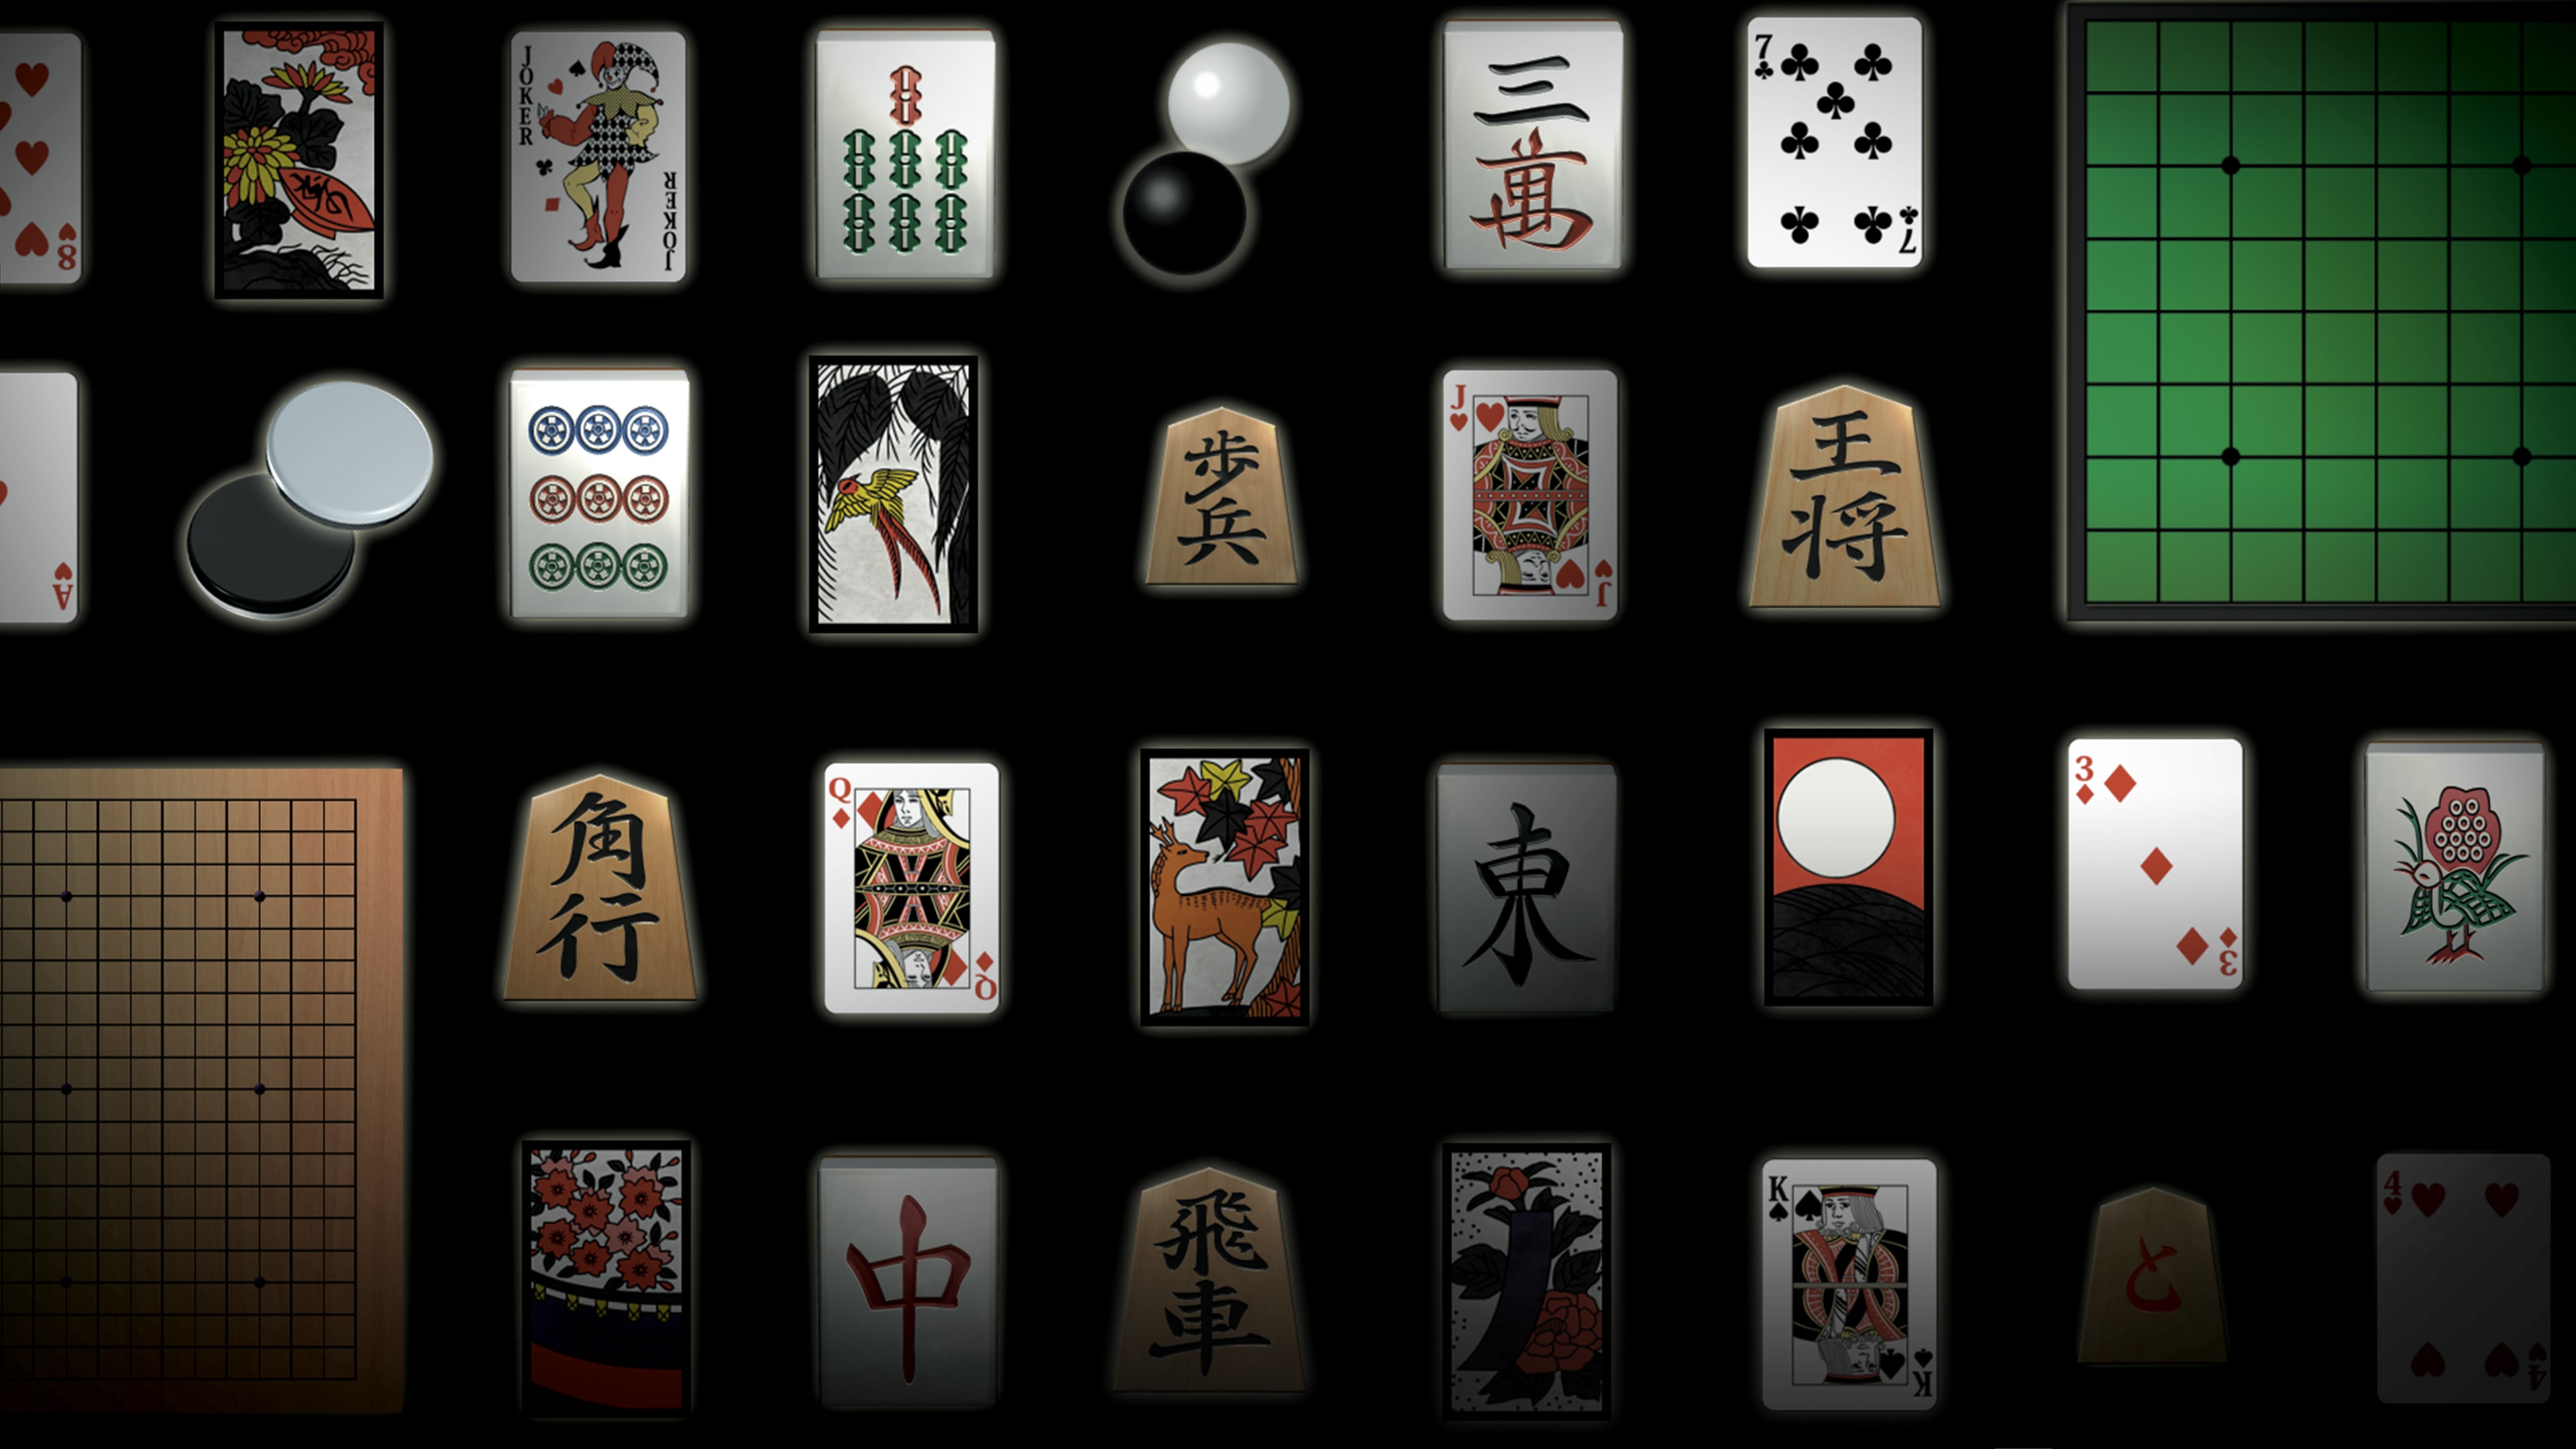 THE Table Game Deluxe Pack 　-Mahjong, Go, Shogi, Tsume Shogi, Othello, Card, Hanafuda, Shisen Mahjong Solitaire, Chess, Backgammon- (English, Japanese)